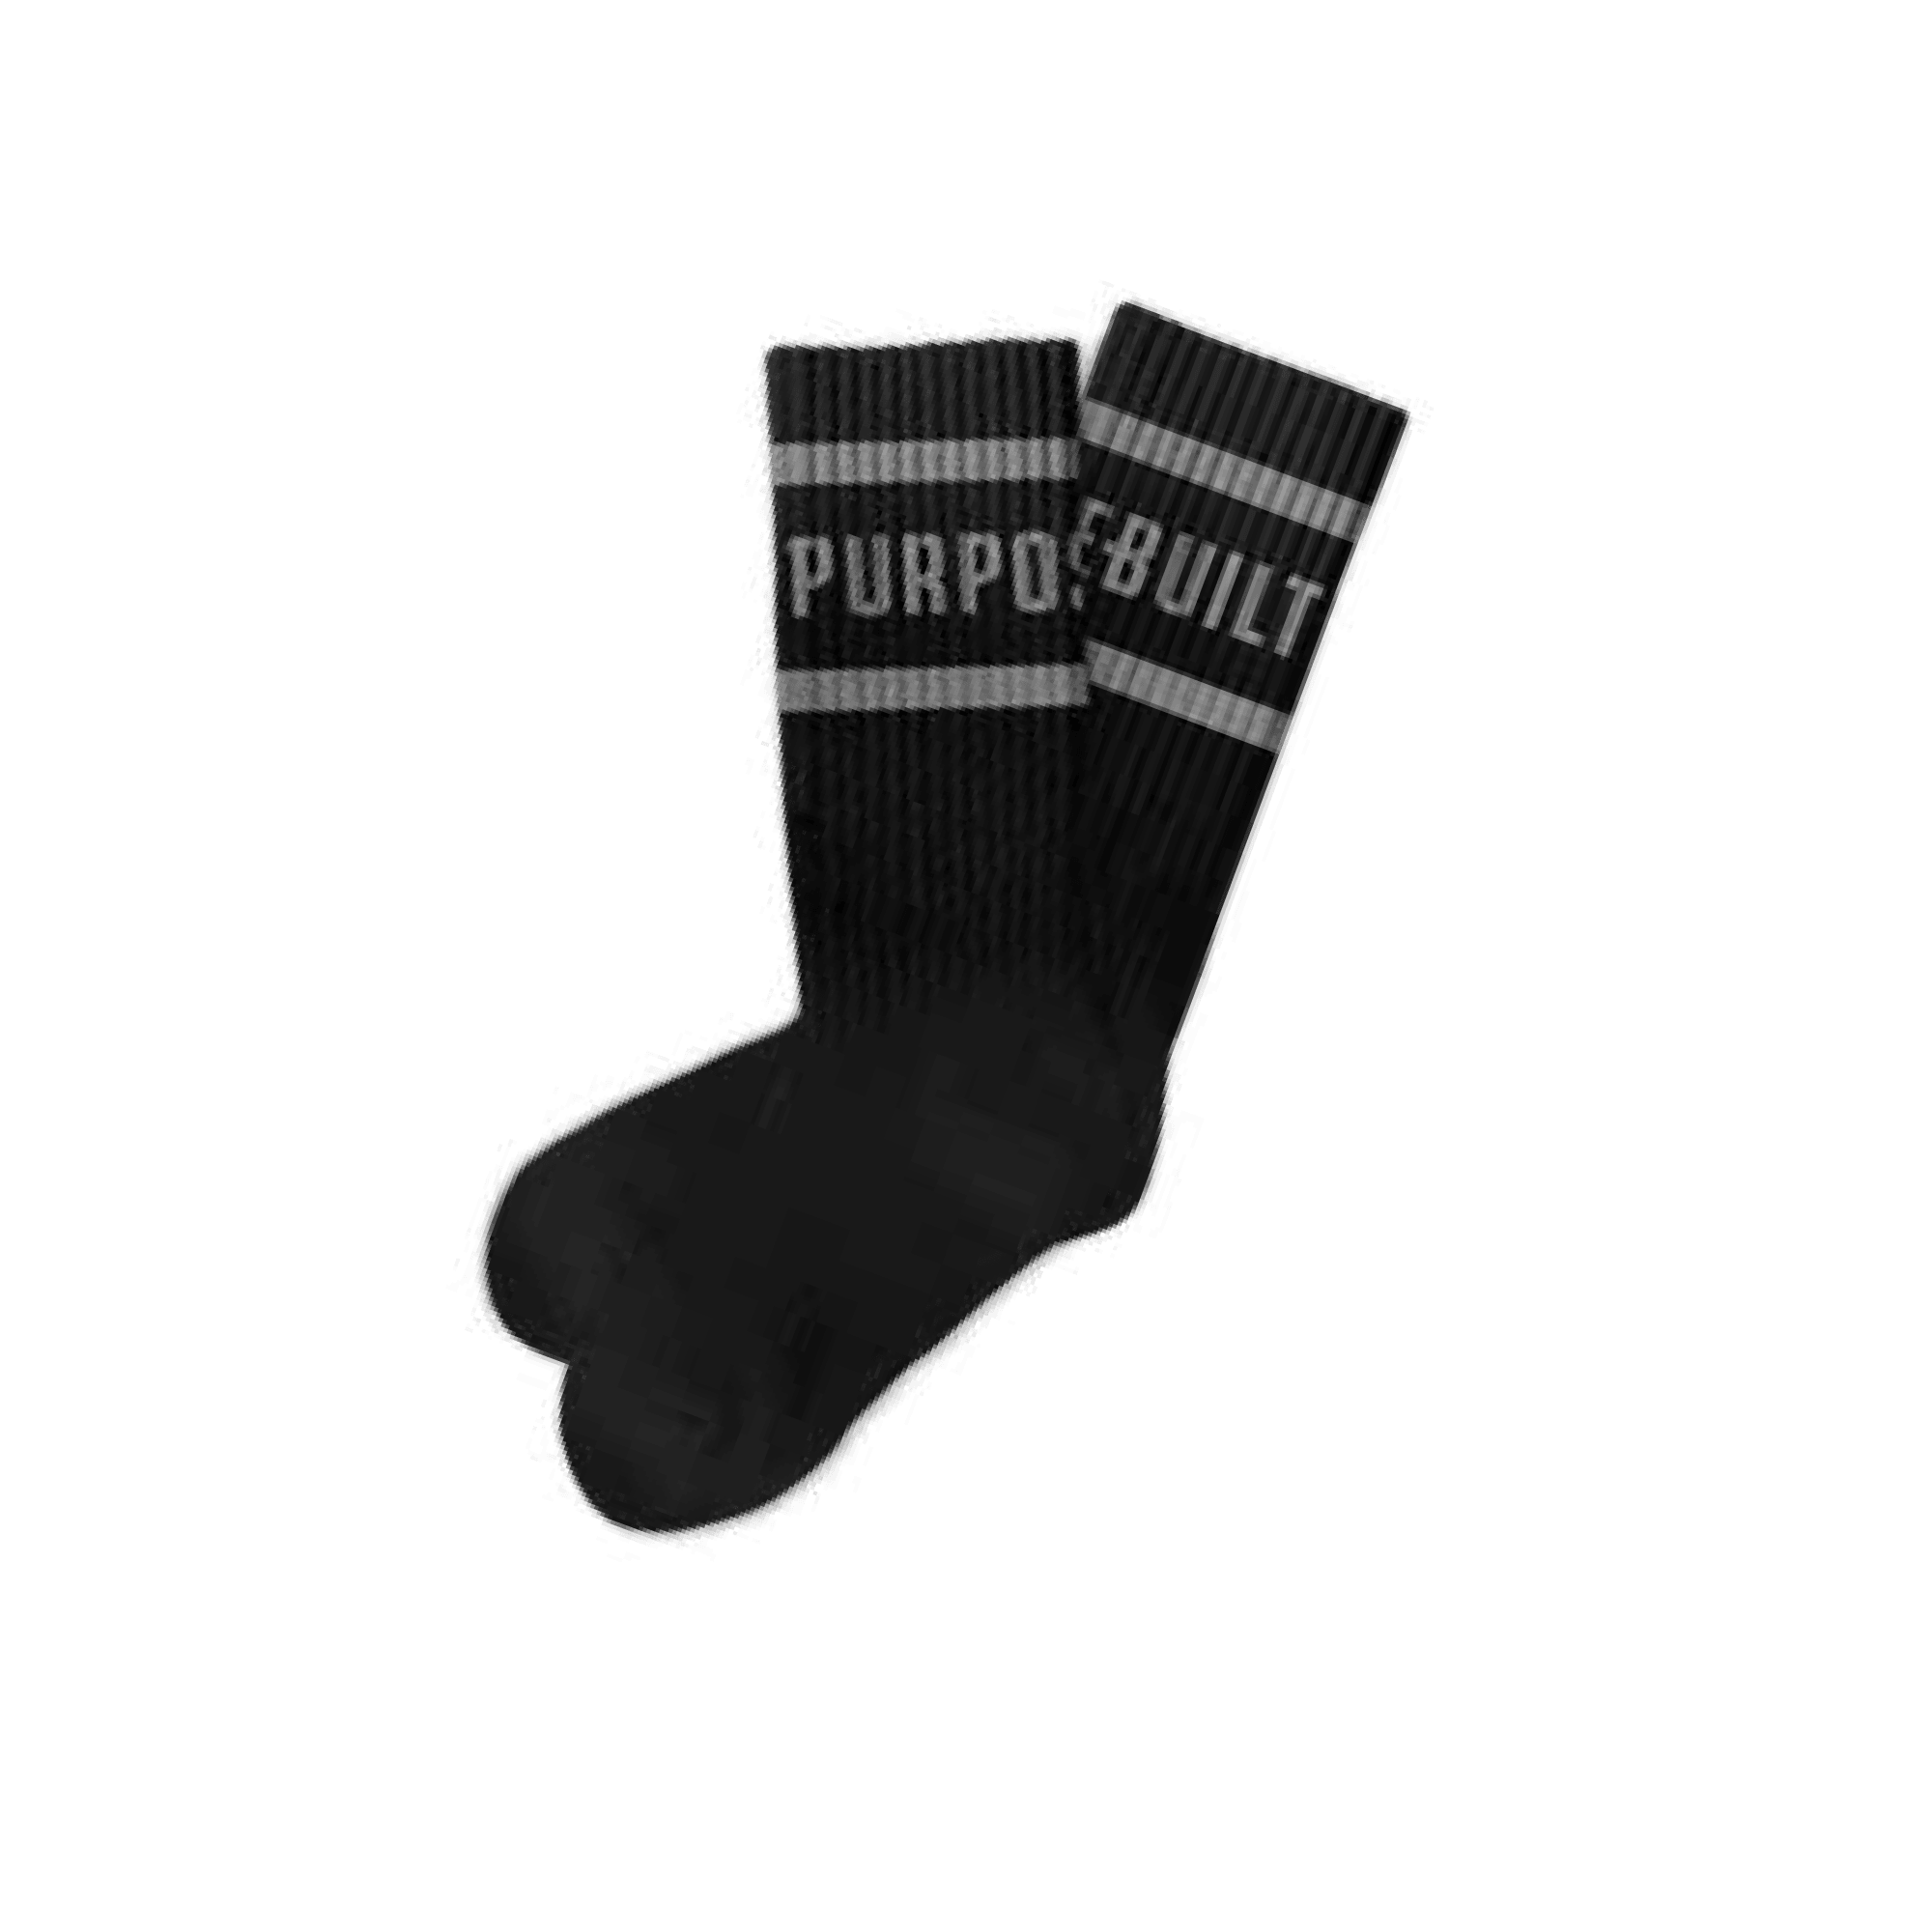 Purpose-Built Athletic Socks, Black - Purpose-Built / Home of the Trades